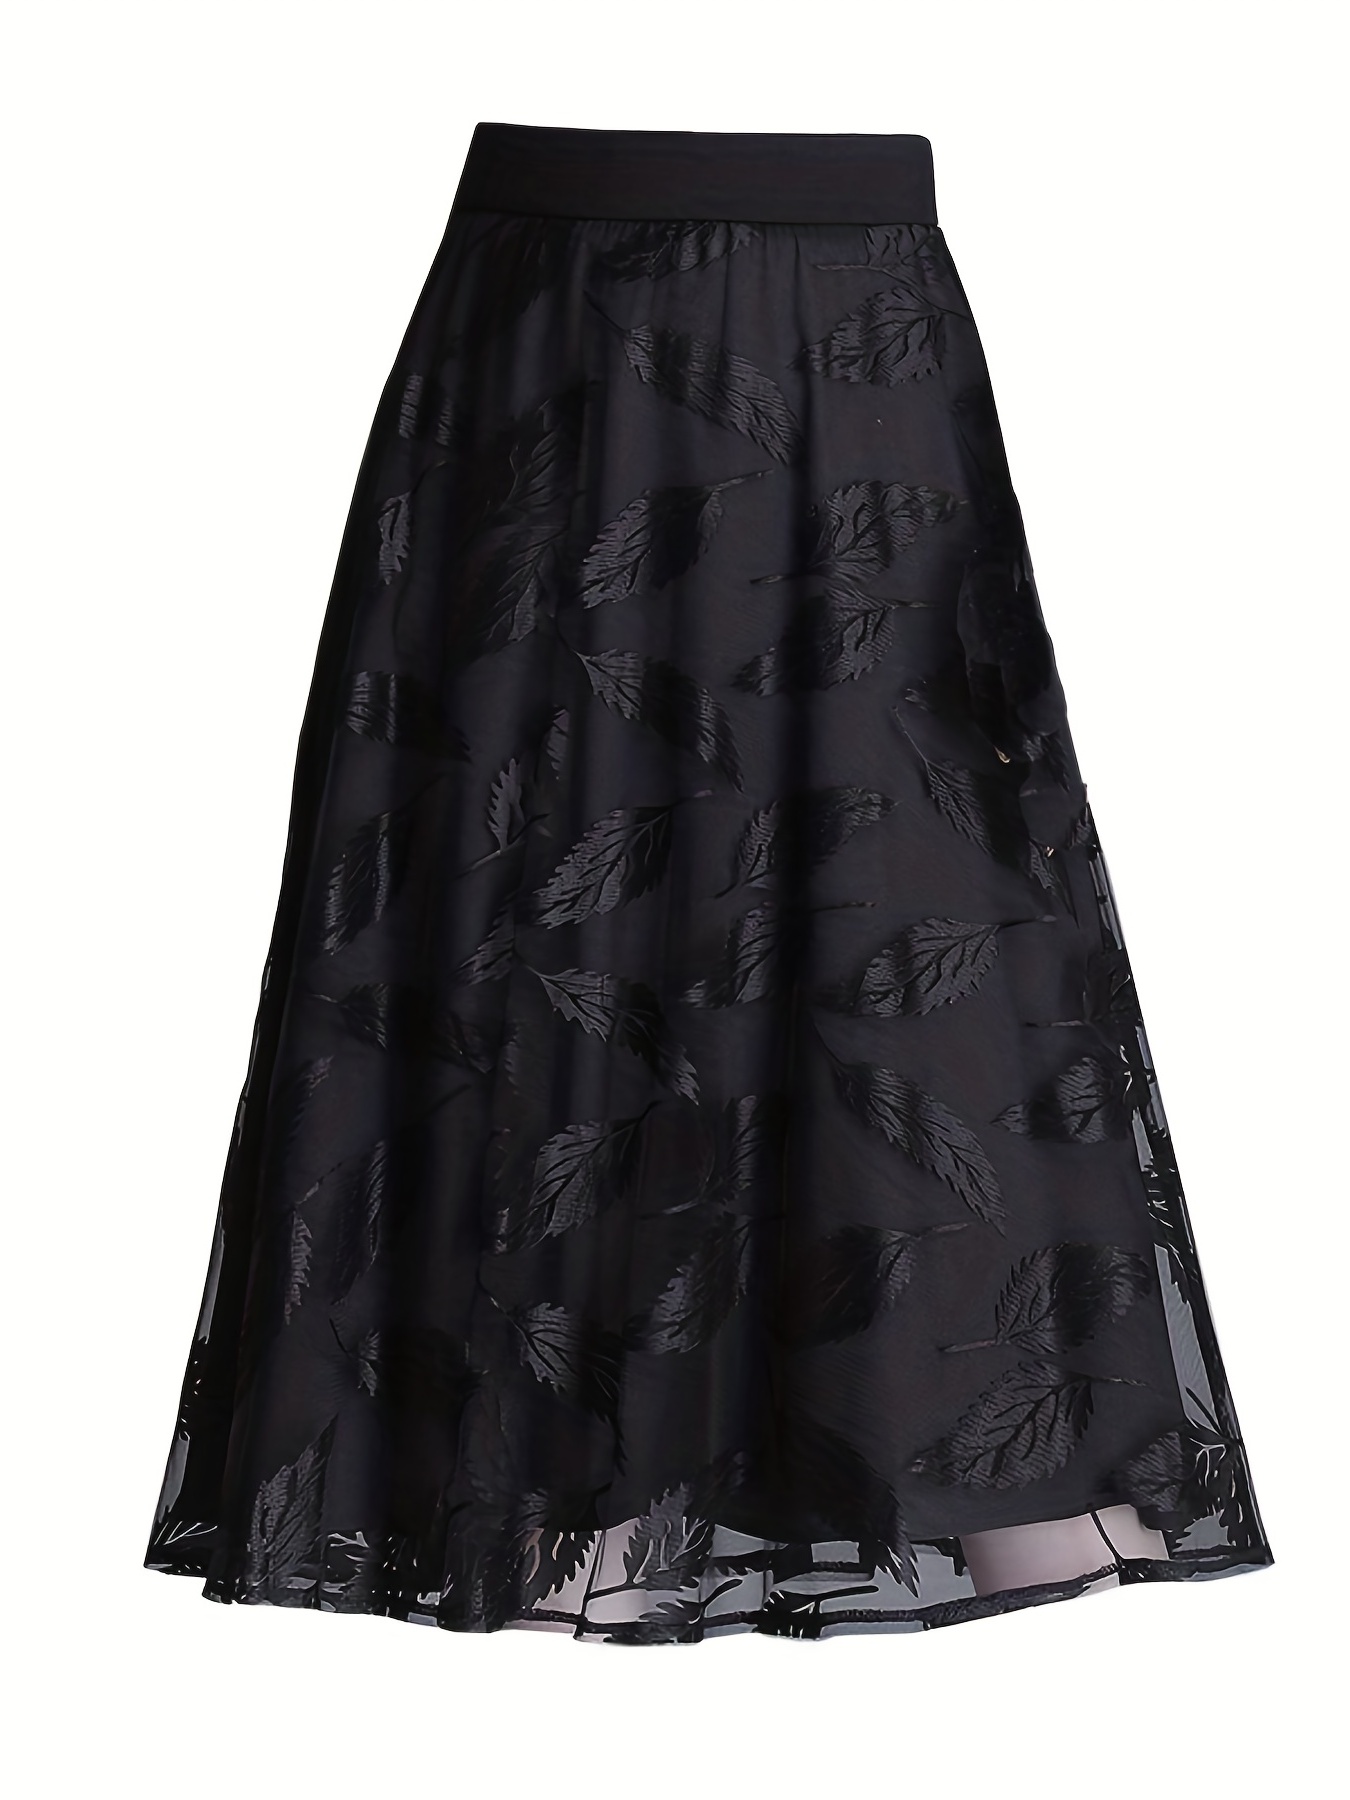 Black Tulle Skirt for Women Knee Length With Lining 